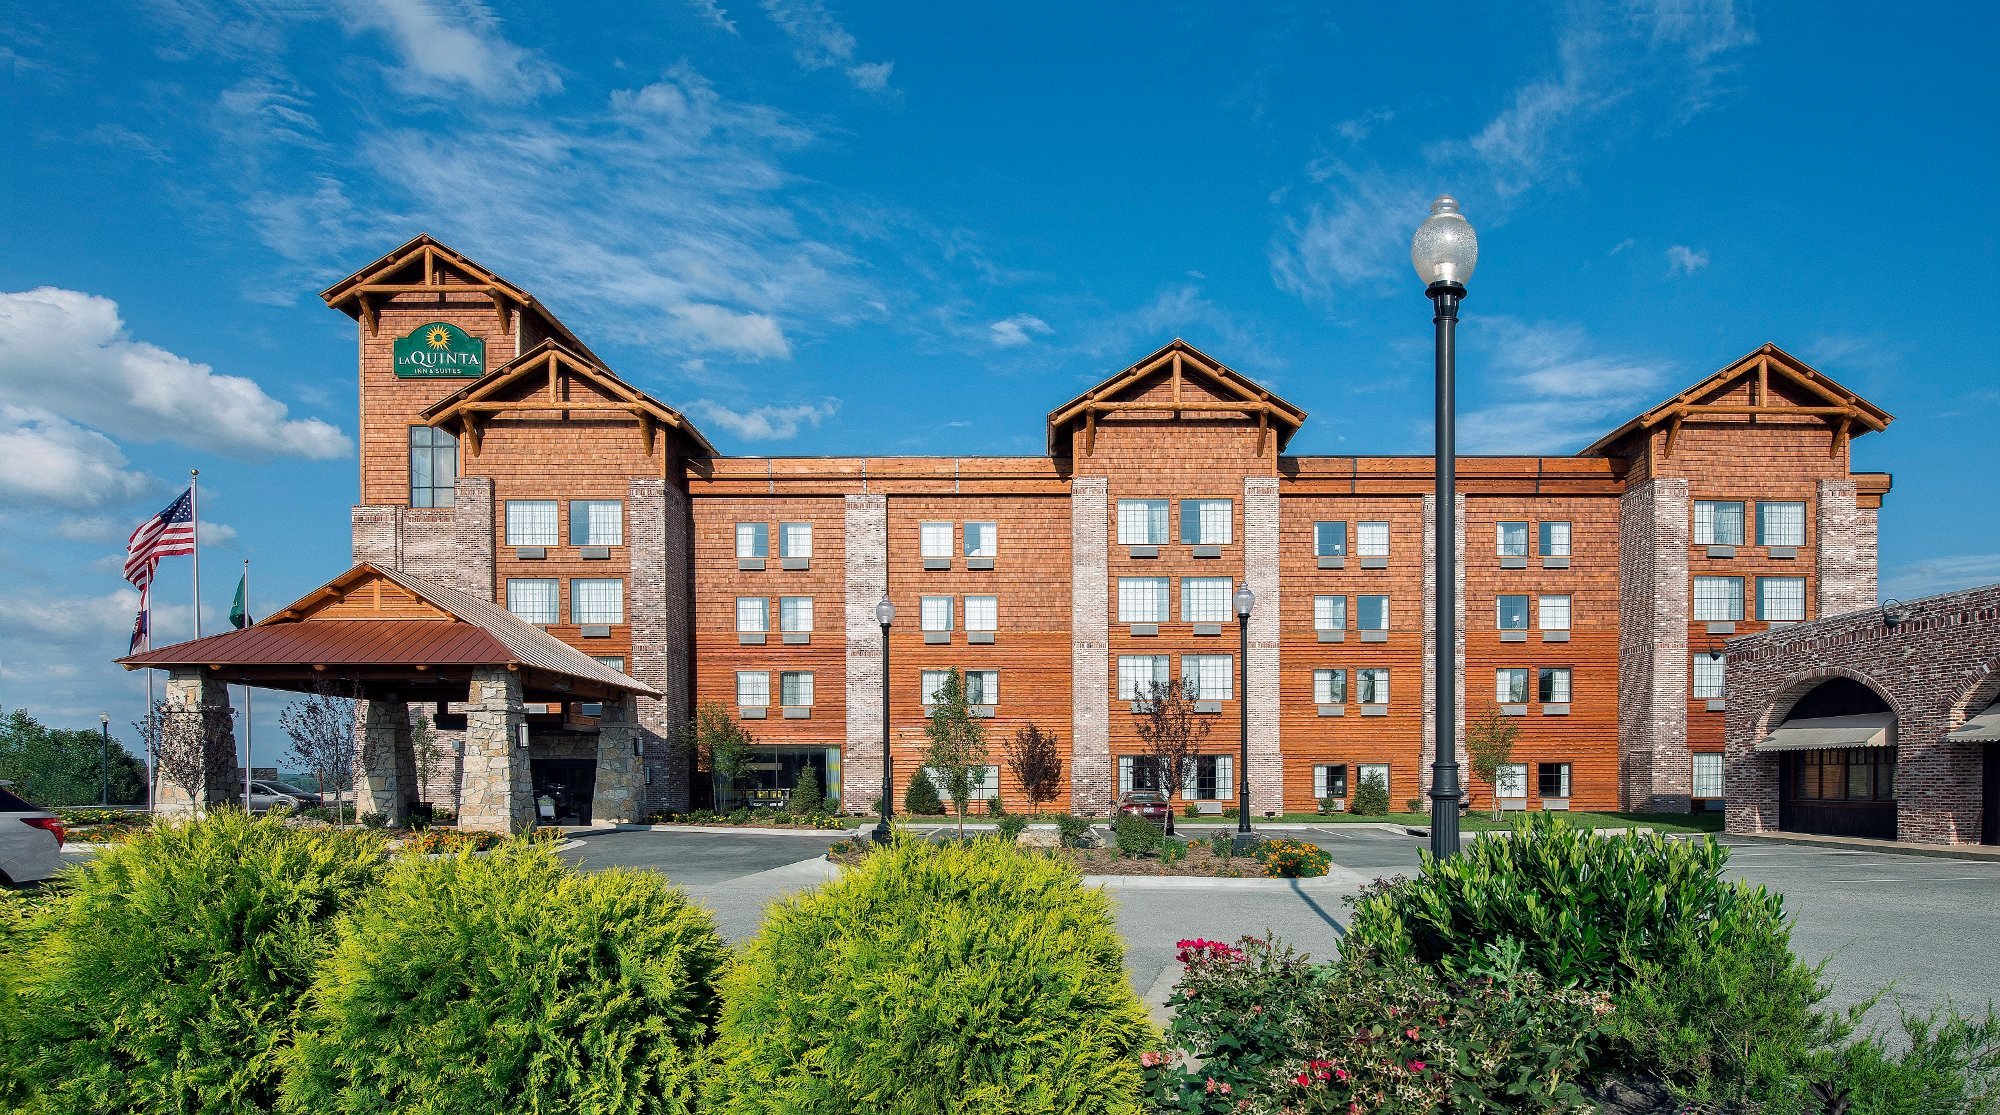 Photo of La Quinta Inn & Suites Branson-Hollister, Hollister, MO